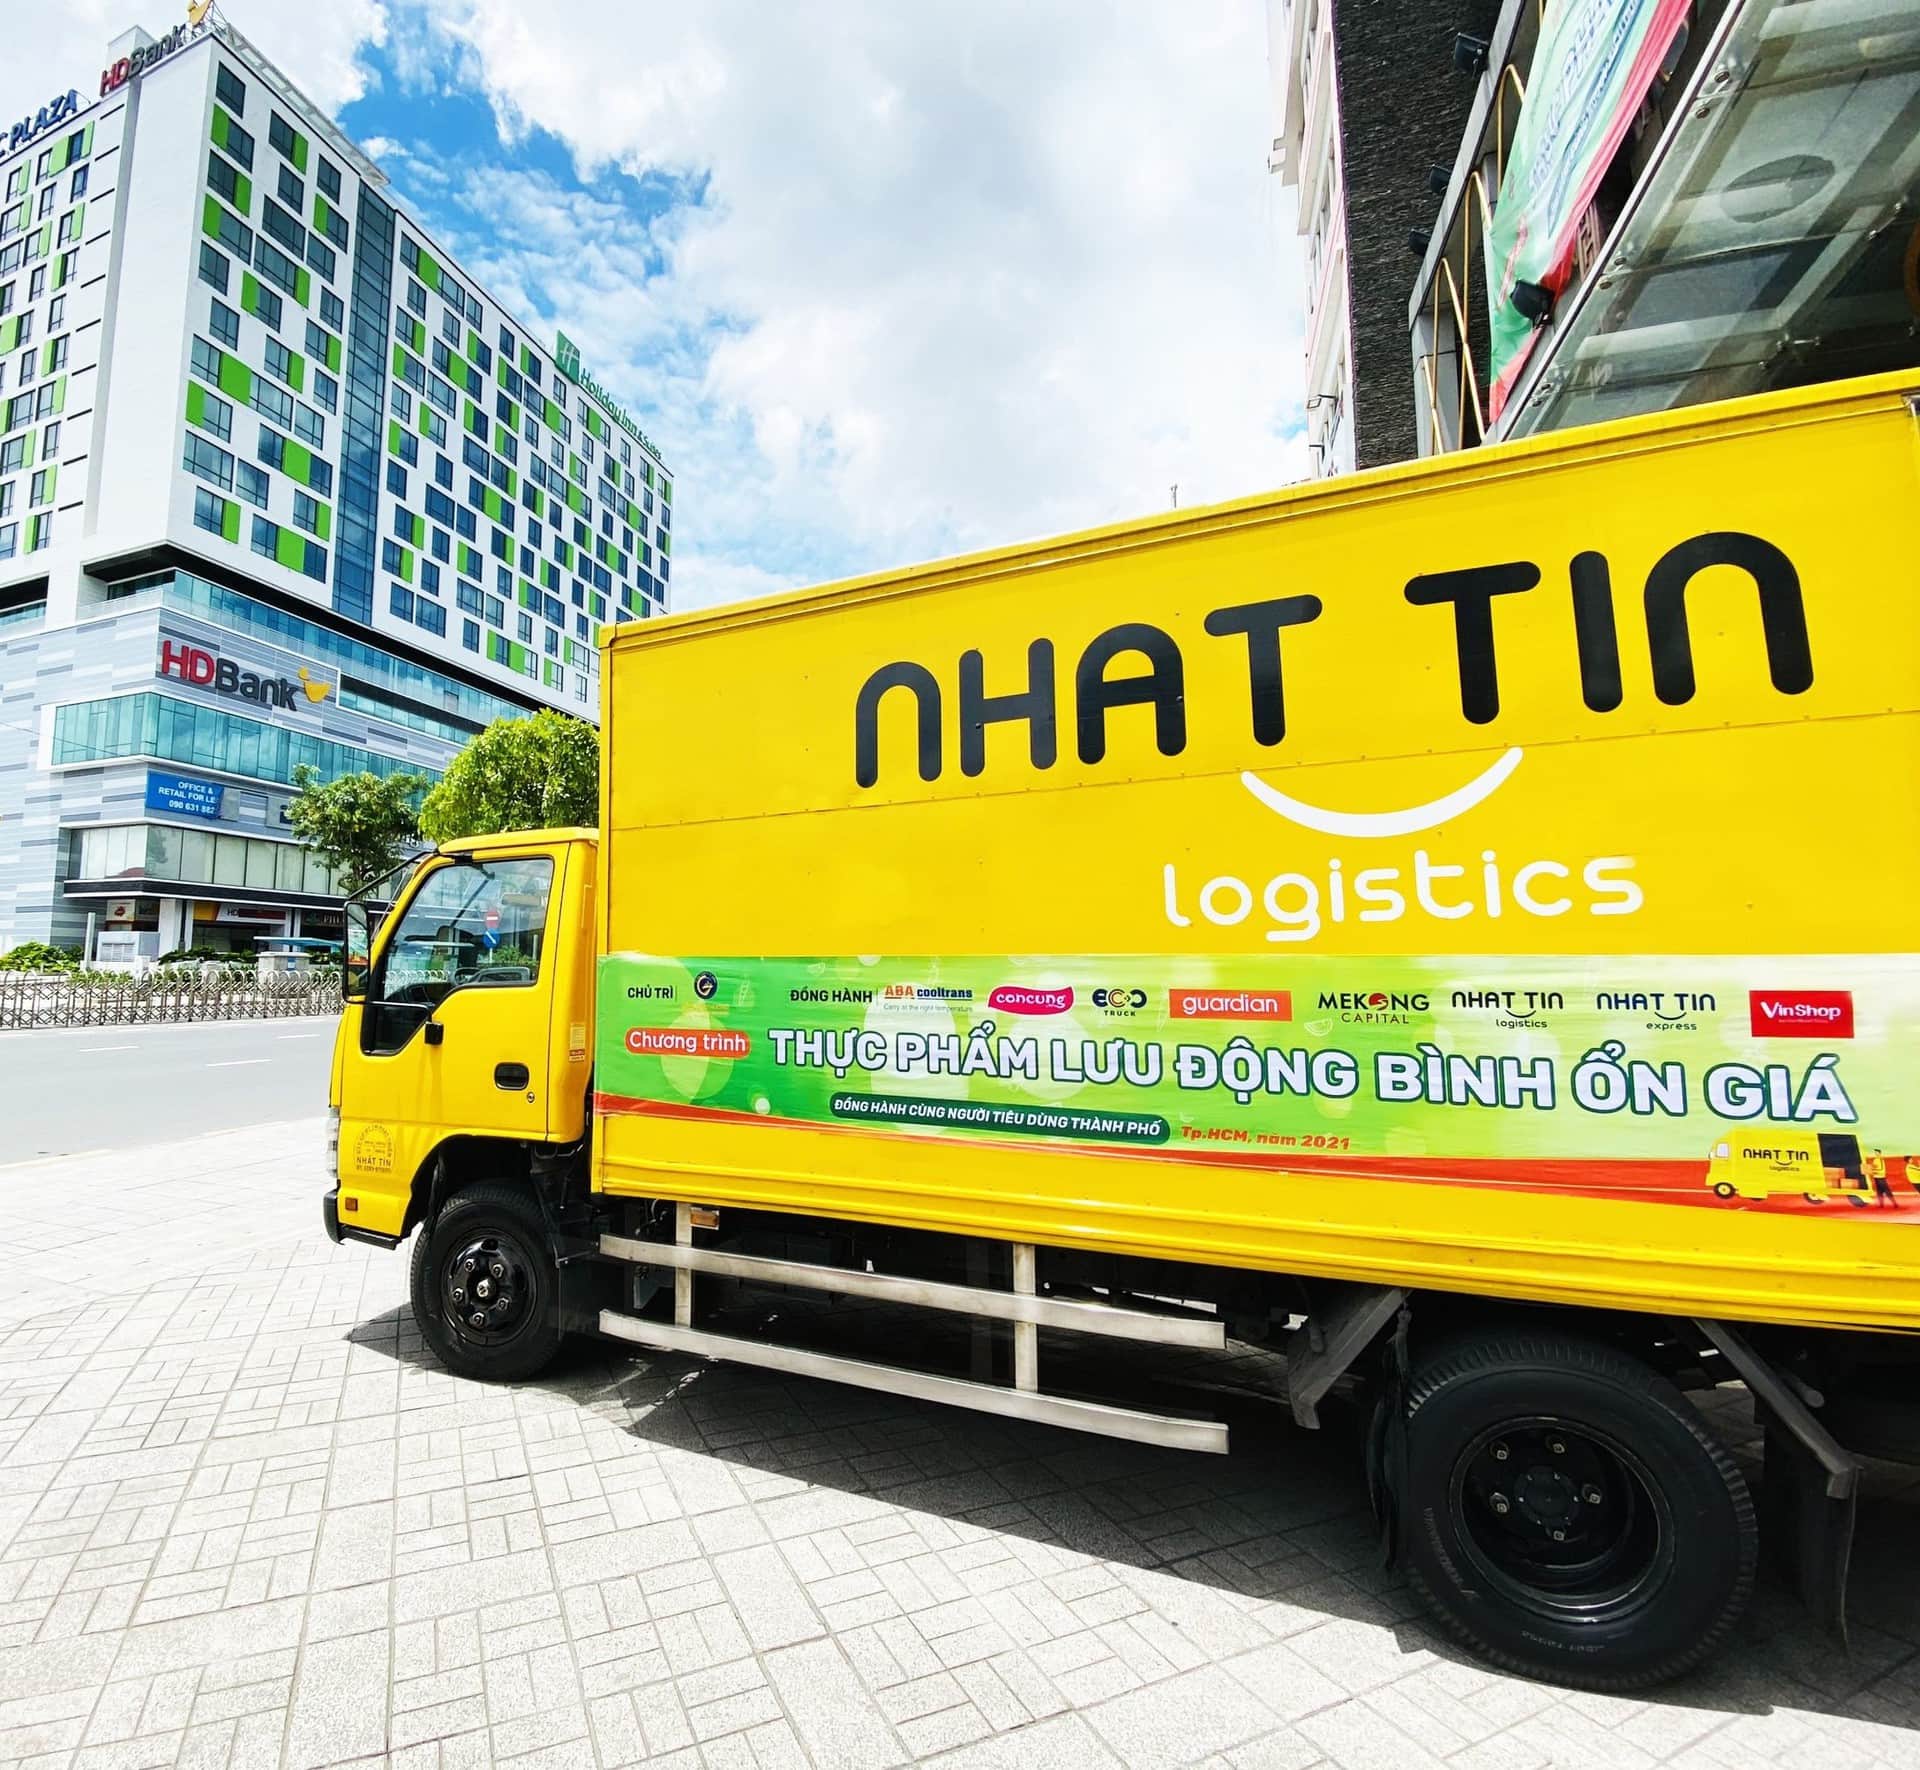 Nhat Tin Logistics Truck